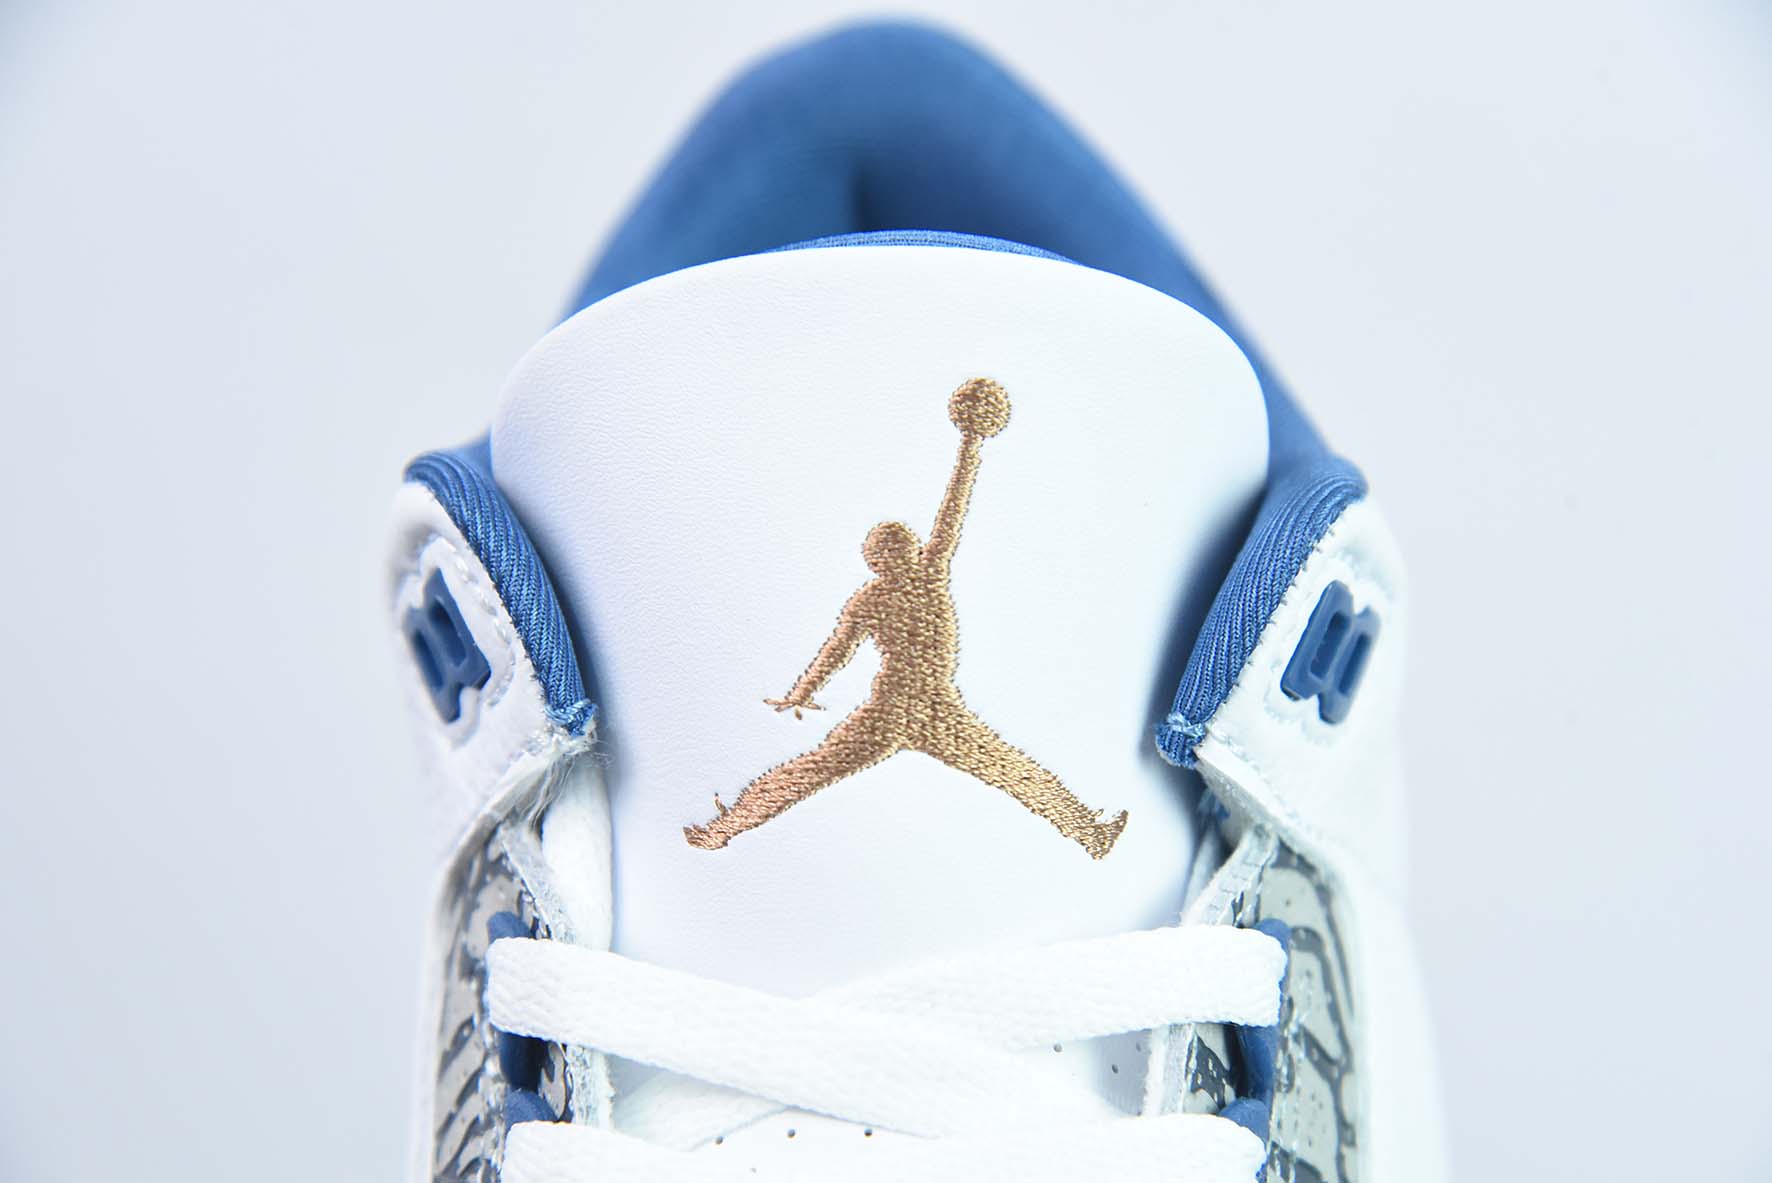 Air Jordan 3  Retro  "White  and  True  Blue" 奇才 耐磨  复古篮球鞋 白蓝  货号：CT8532-148